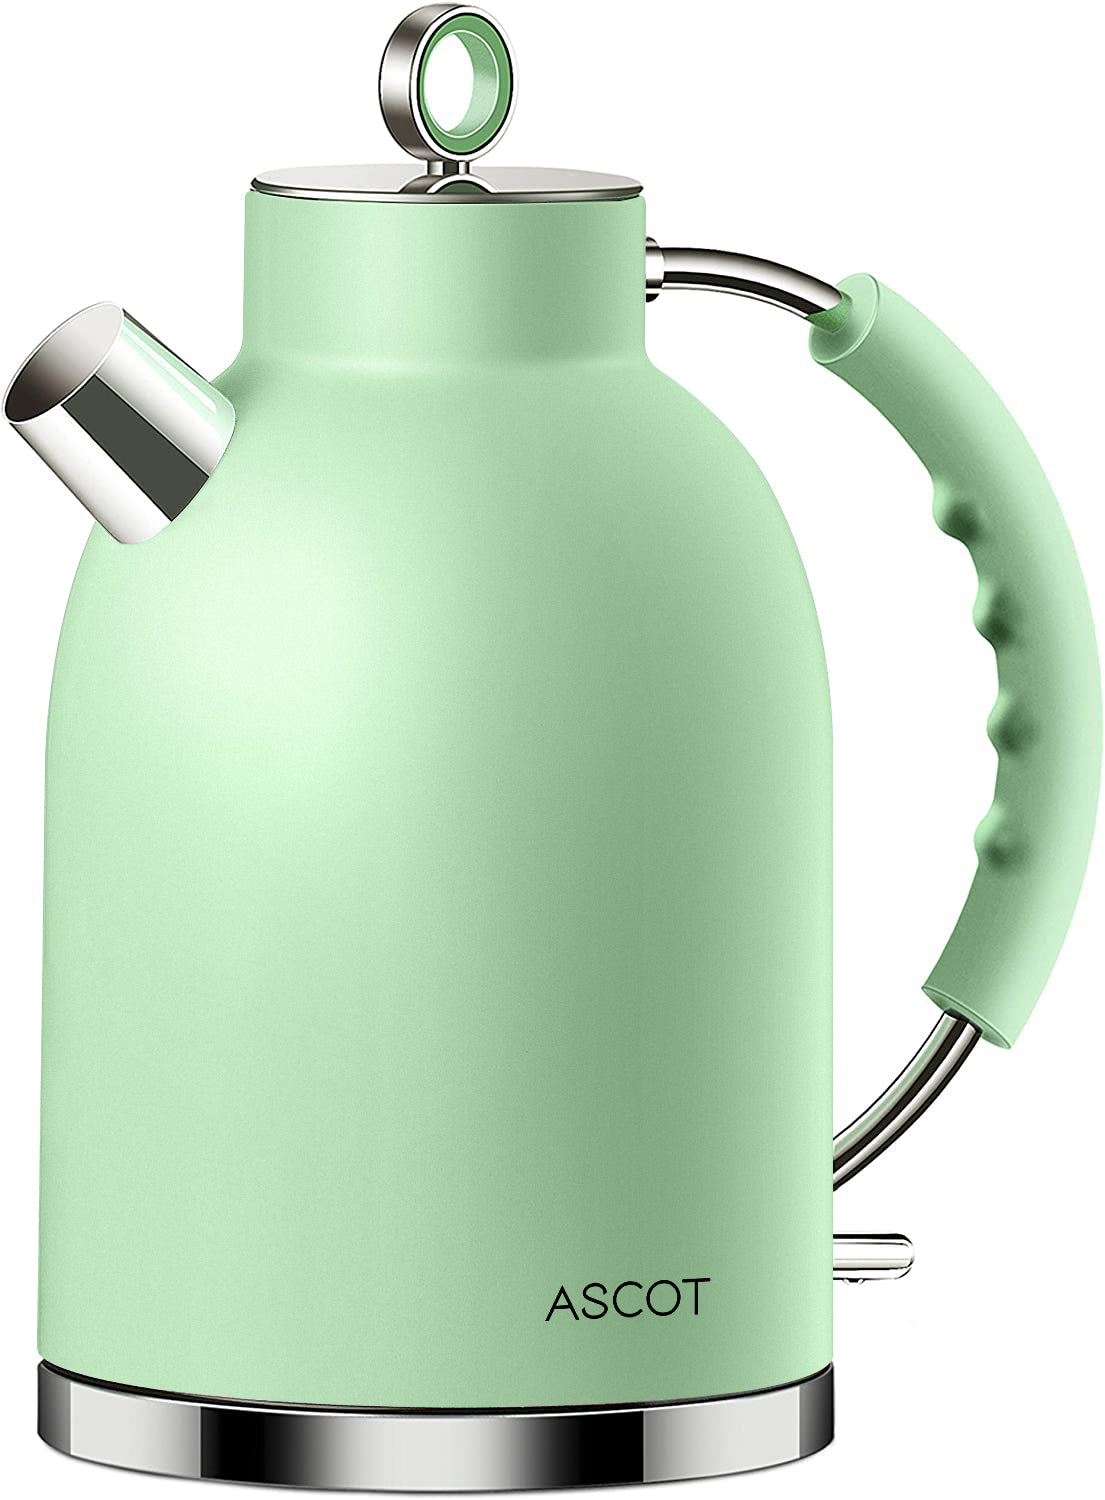 ASCOT Electric Kettle Stainless Steel Tea Kettle,1.5L(K1-Matte Green)